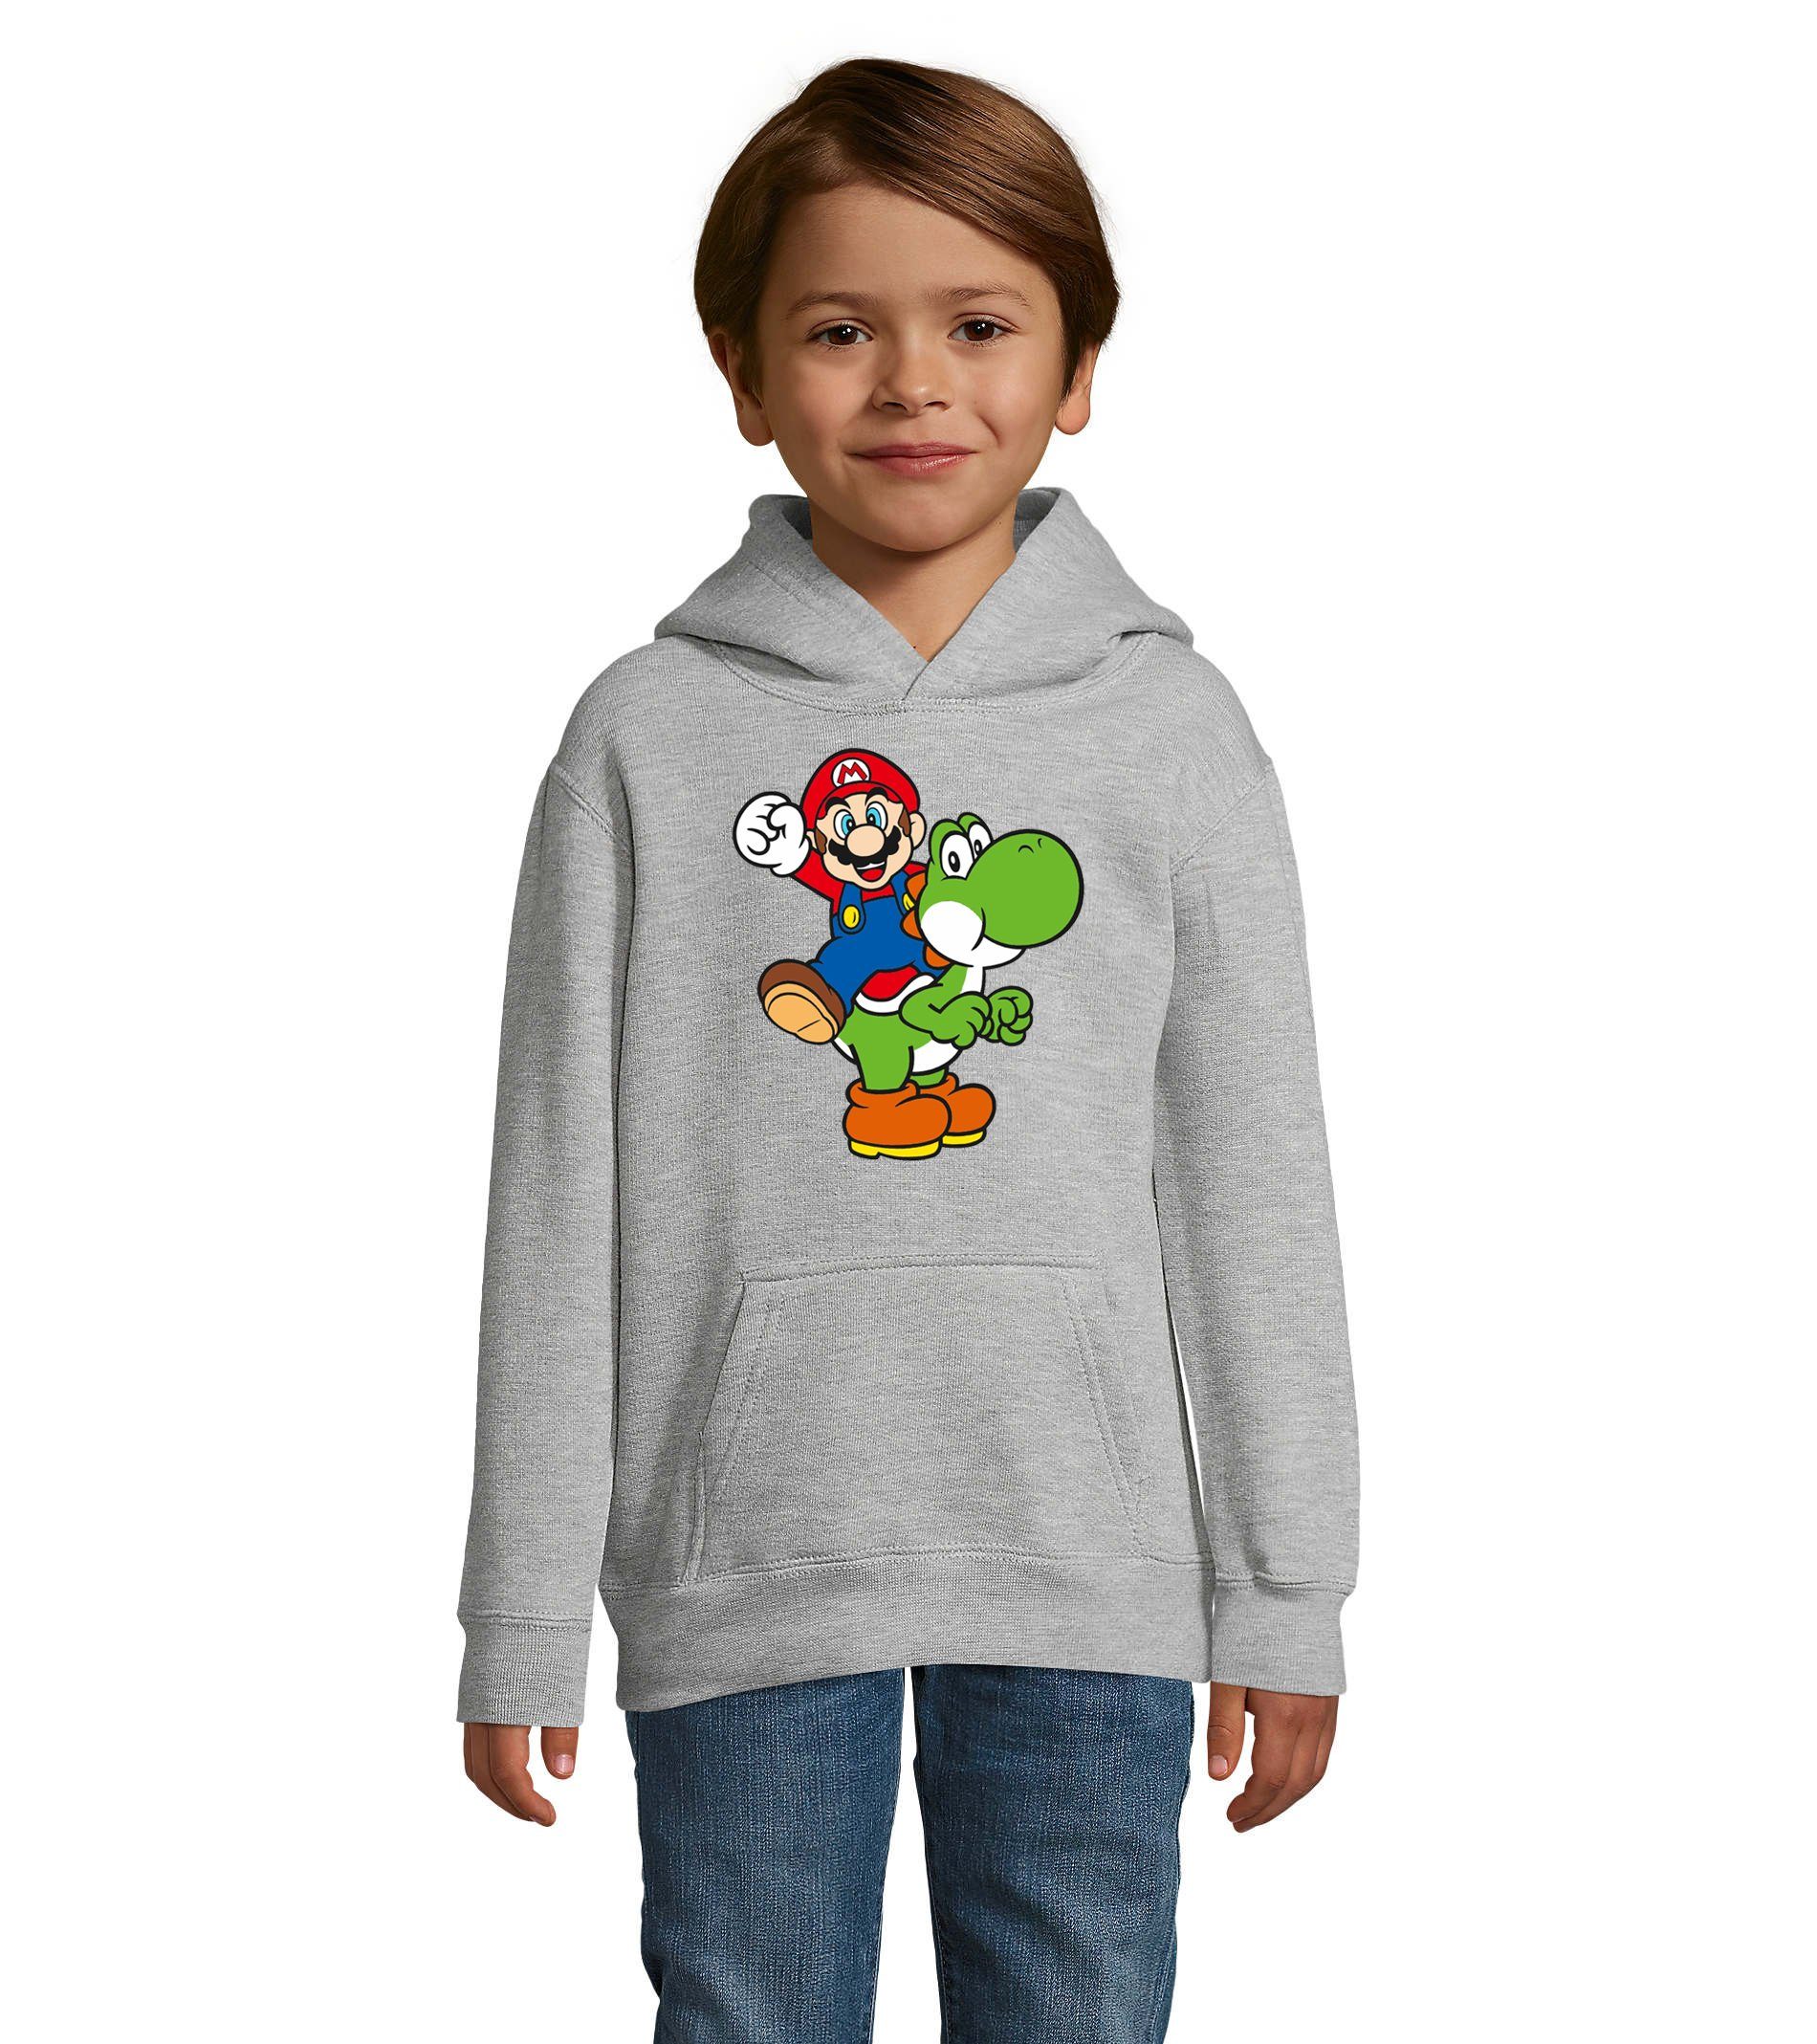 Blondie & Brownie Hoodie Kinder Yoshi & Mario Konsole Super Nintendo Luigi mit Kaputze Grau